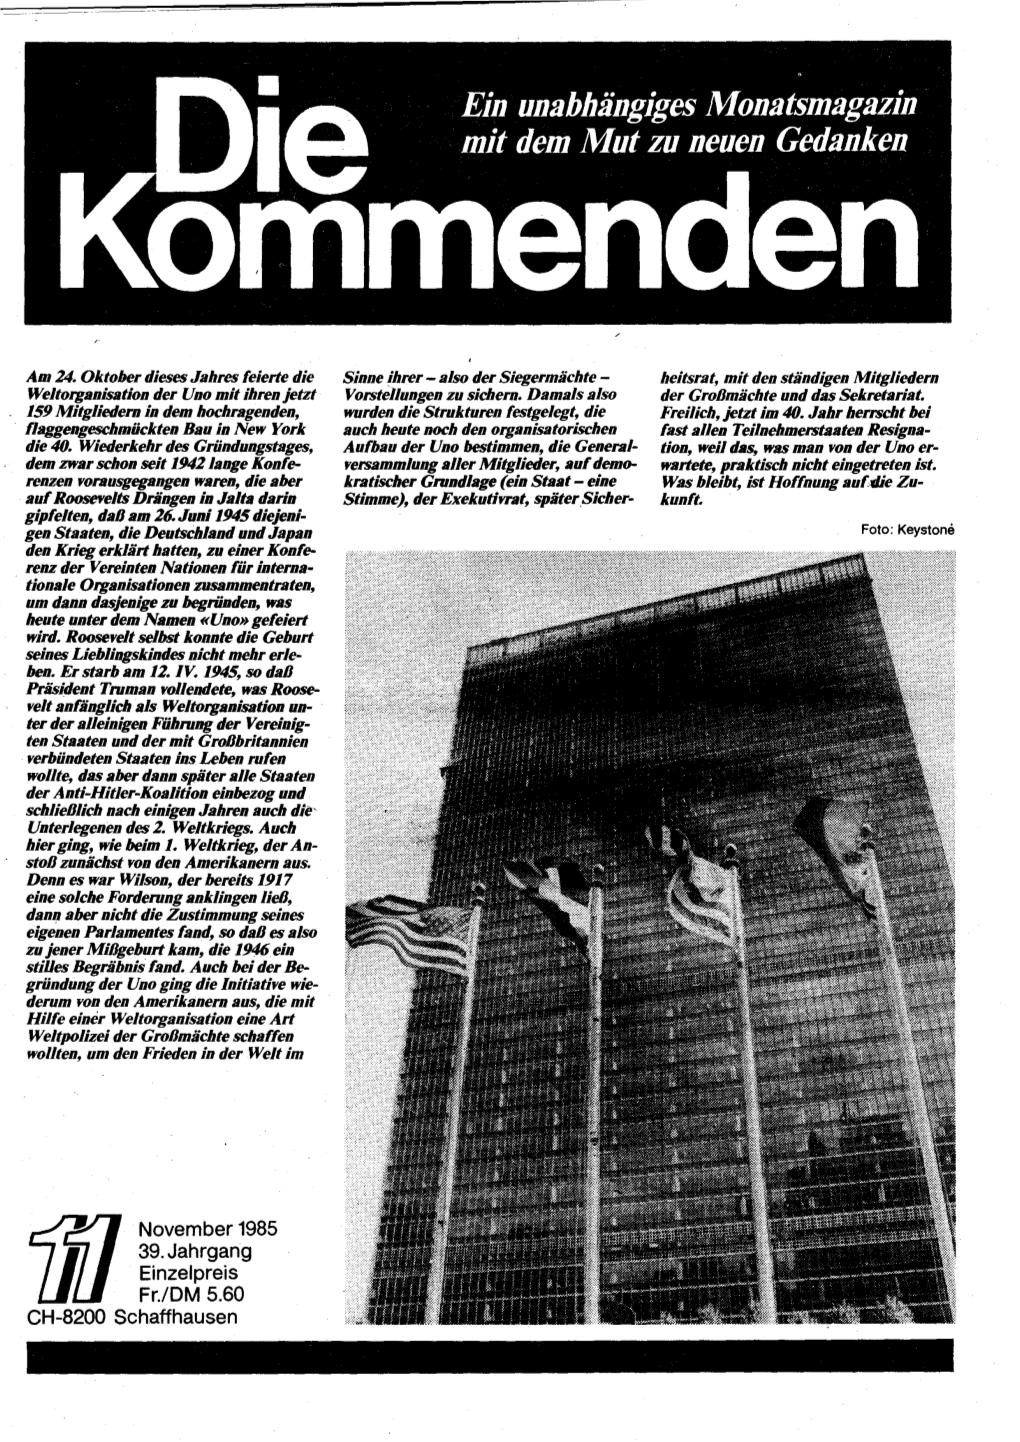 Die Kommenden – Nov. 1985